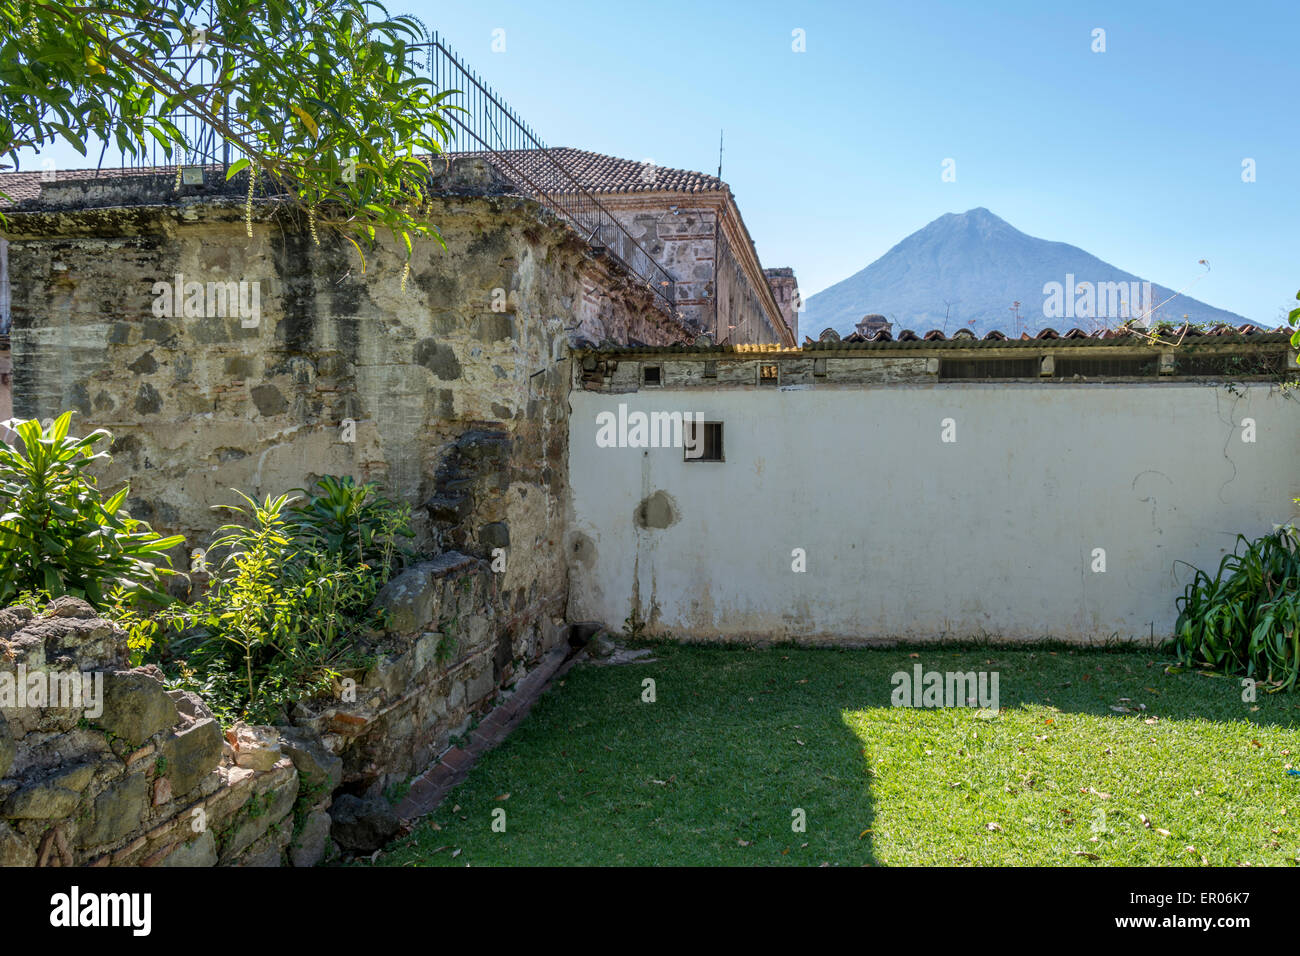 Garden area of Convento de las Capuchinas or Capuchinas Convent in Antigua Guatemala with Volcan Aqua in the background. Stock Photo